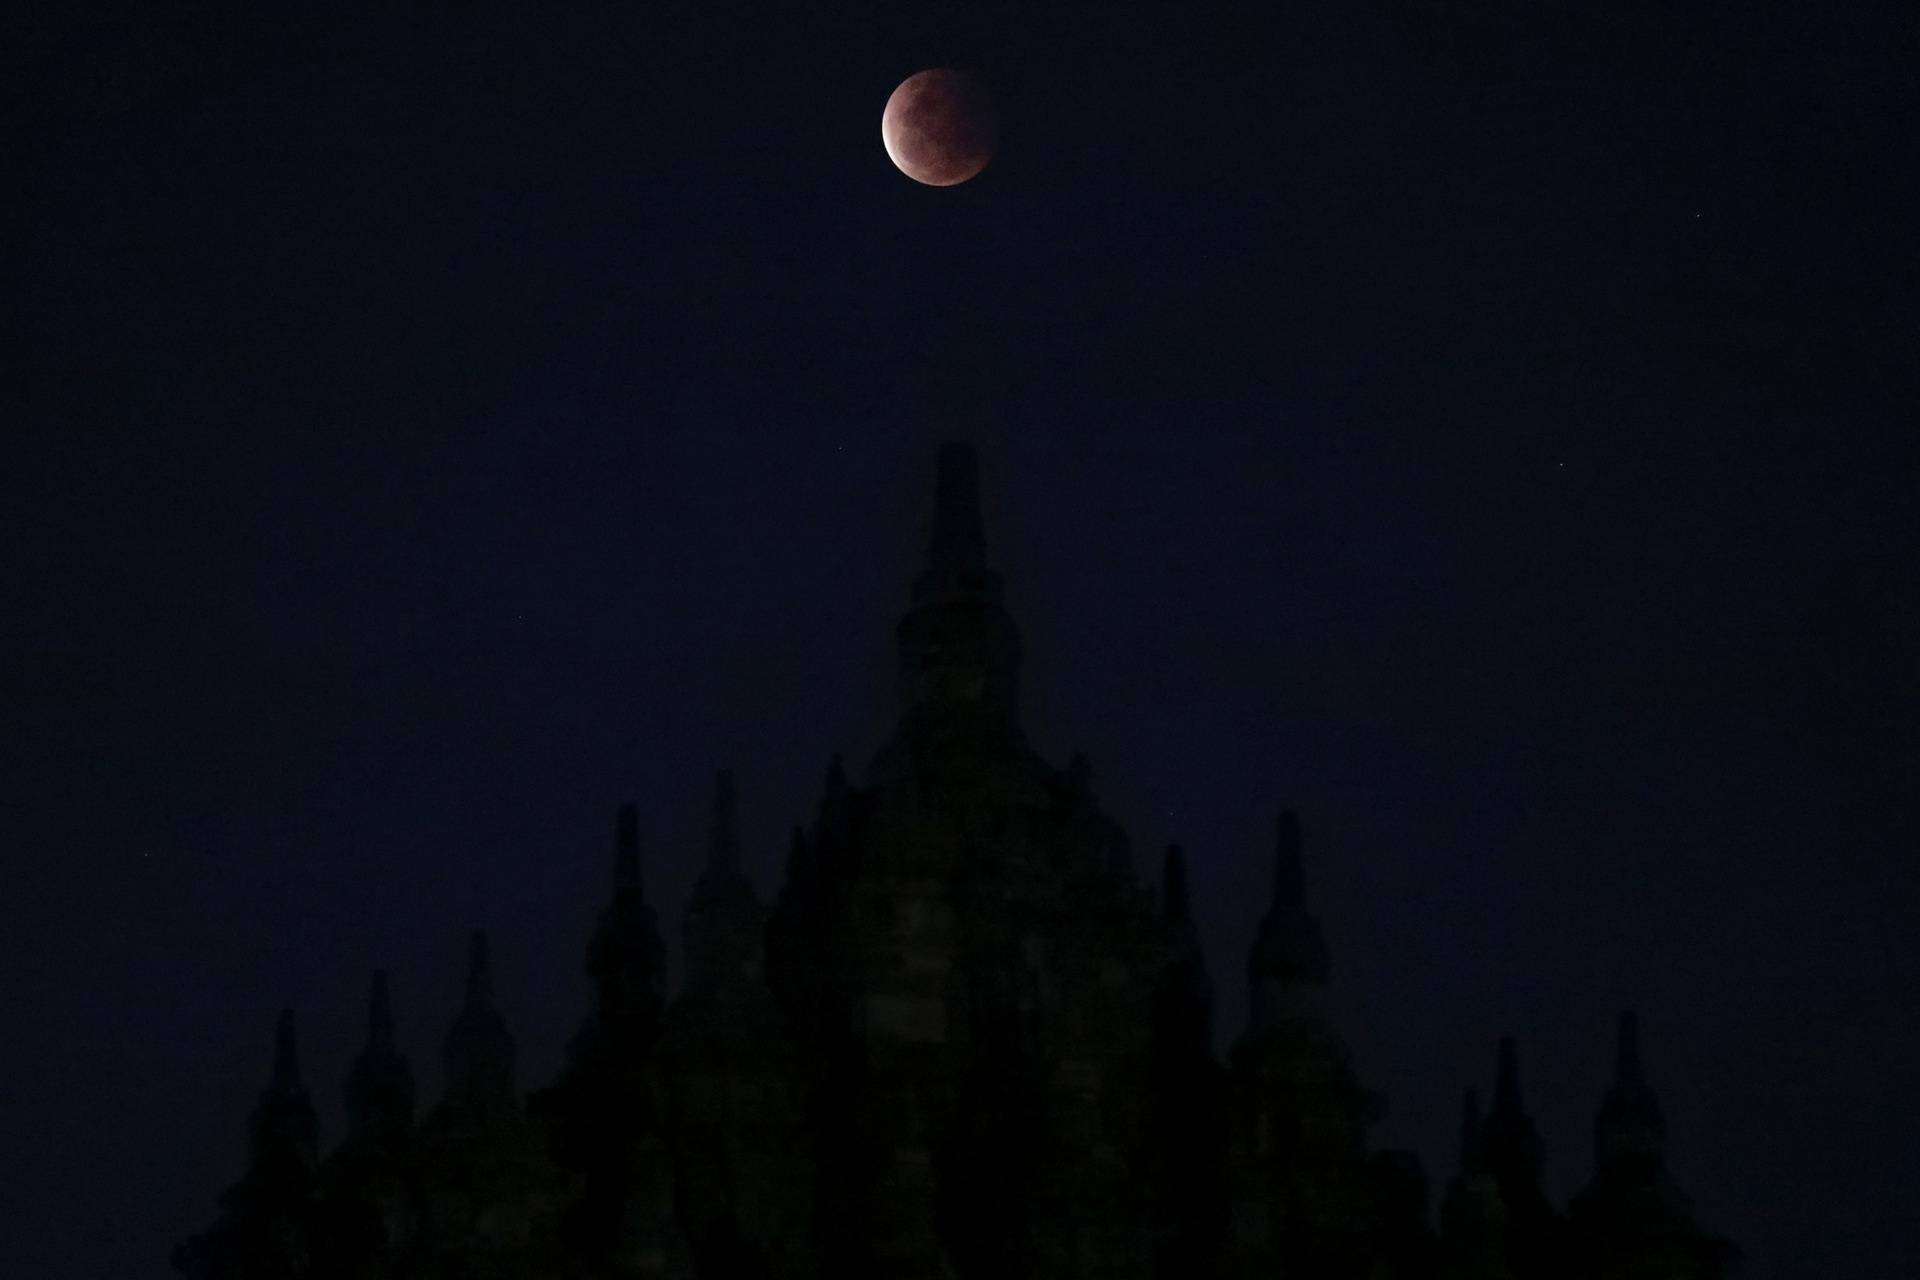 A Super Blood Moon rises over the Plaosan temple during total lunar eclipse in Klaten